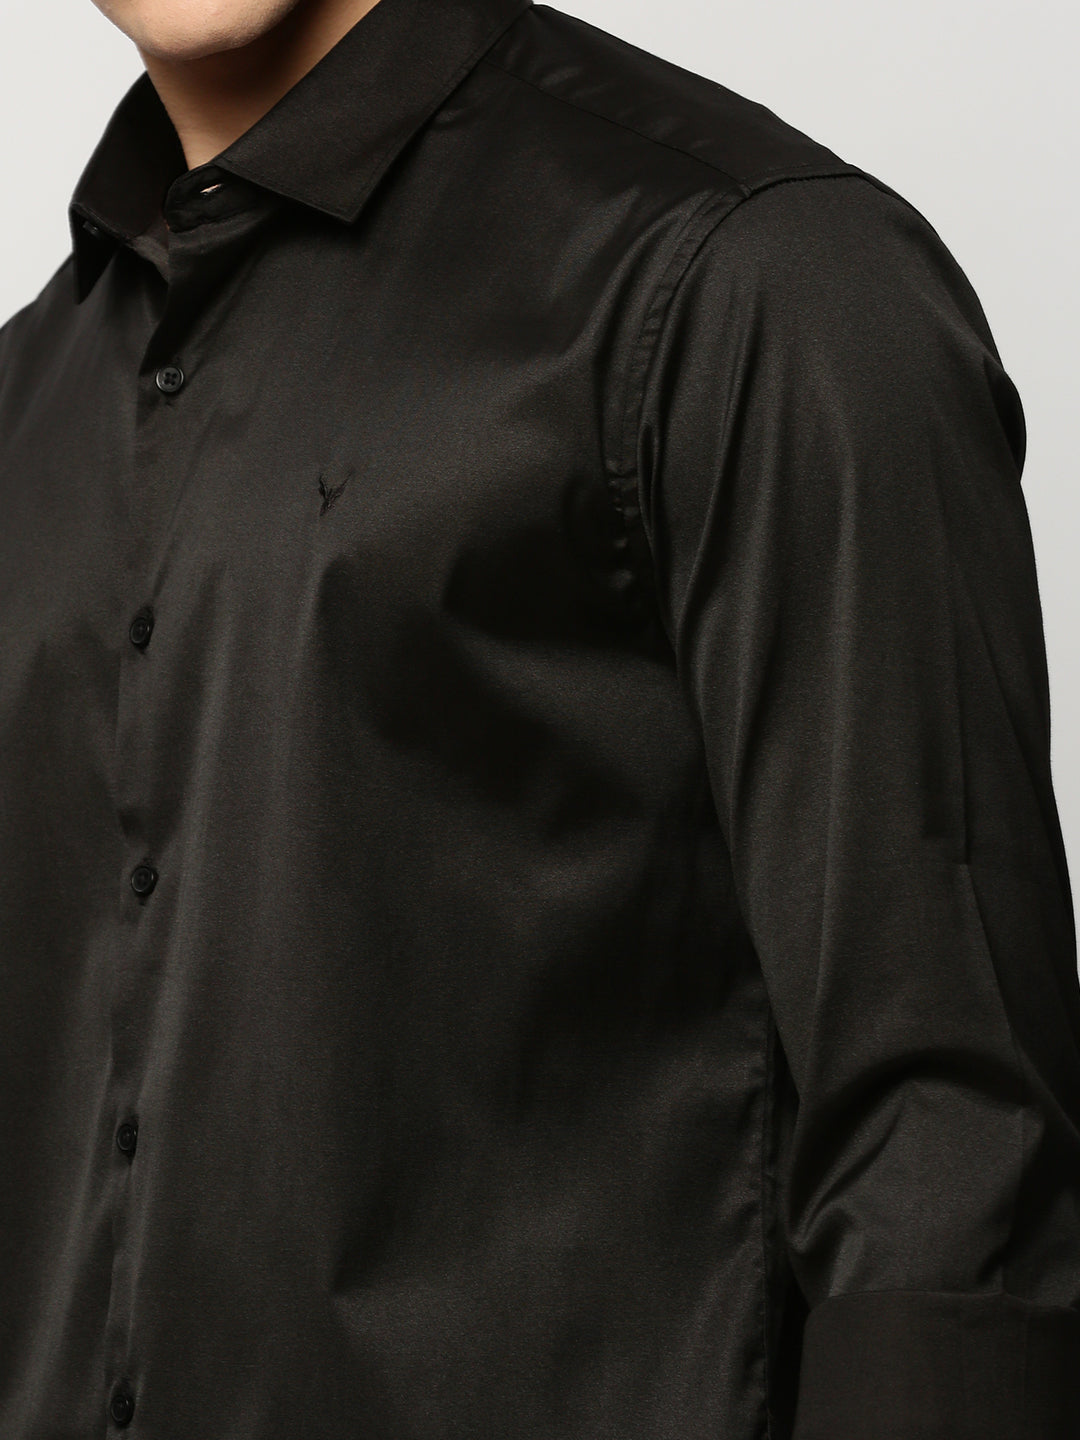 Men Black Solid Casual Casual Shirts